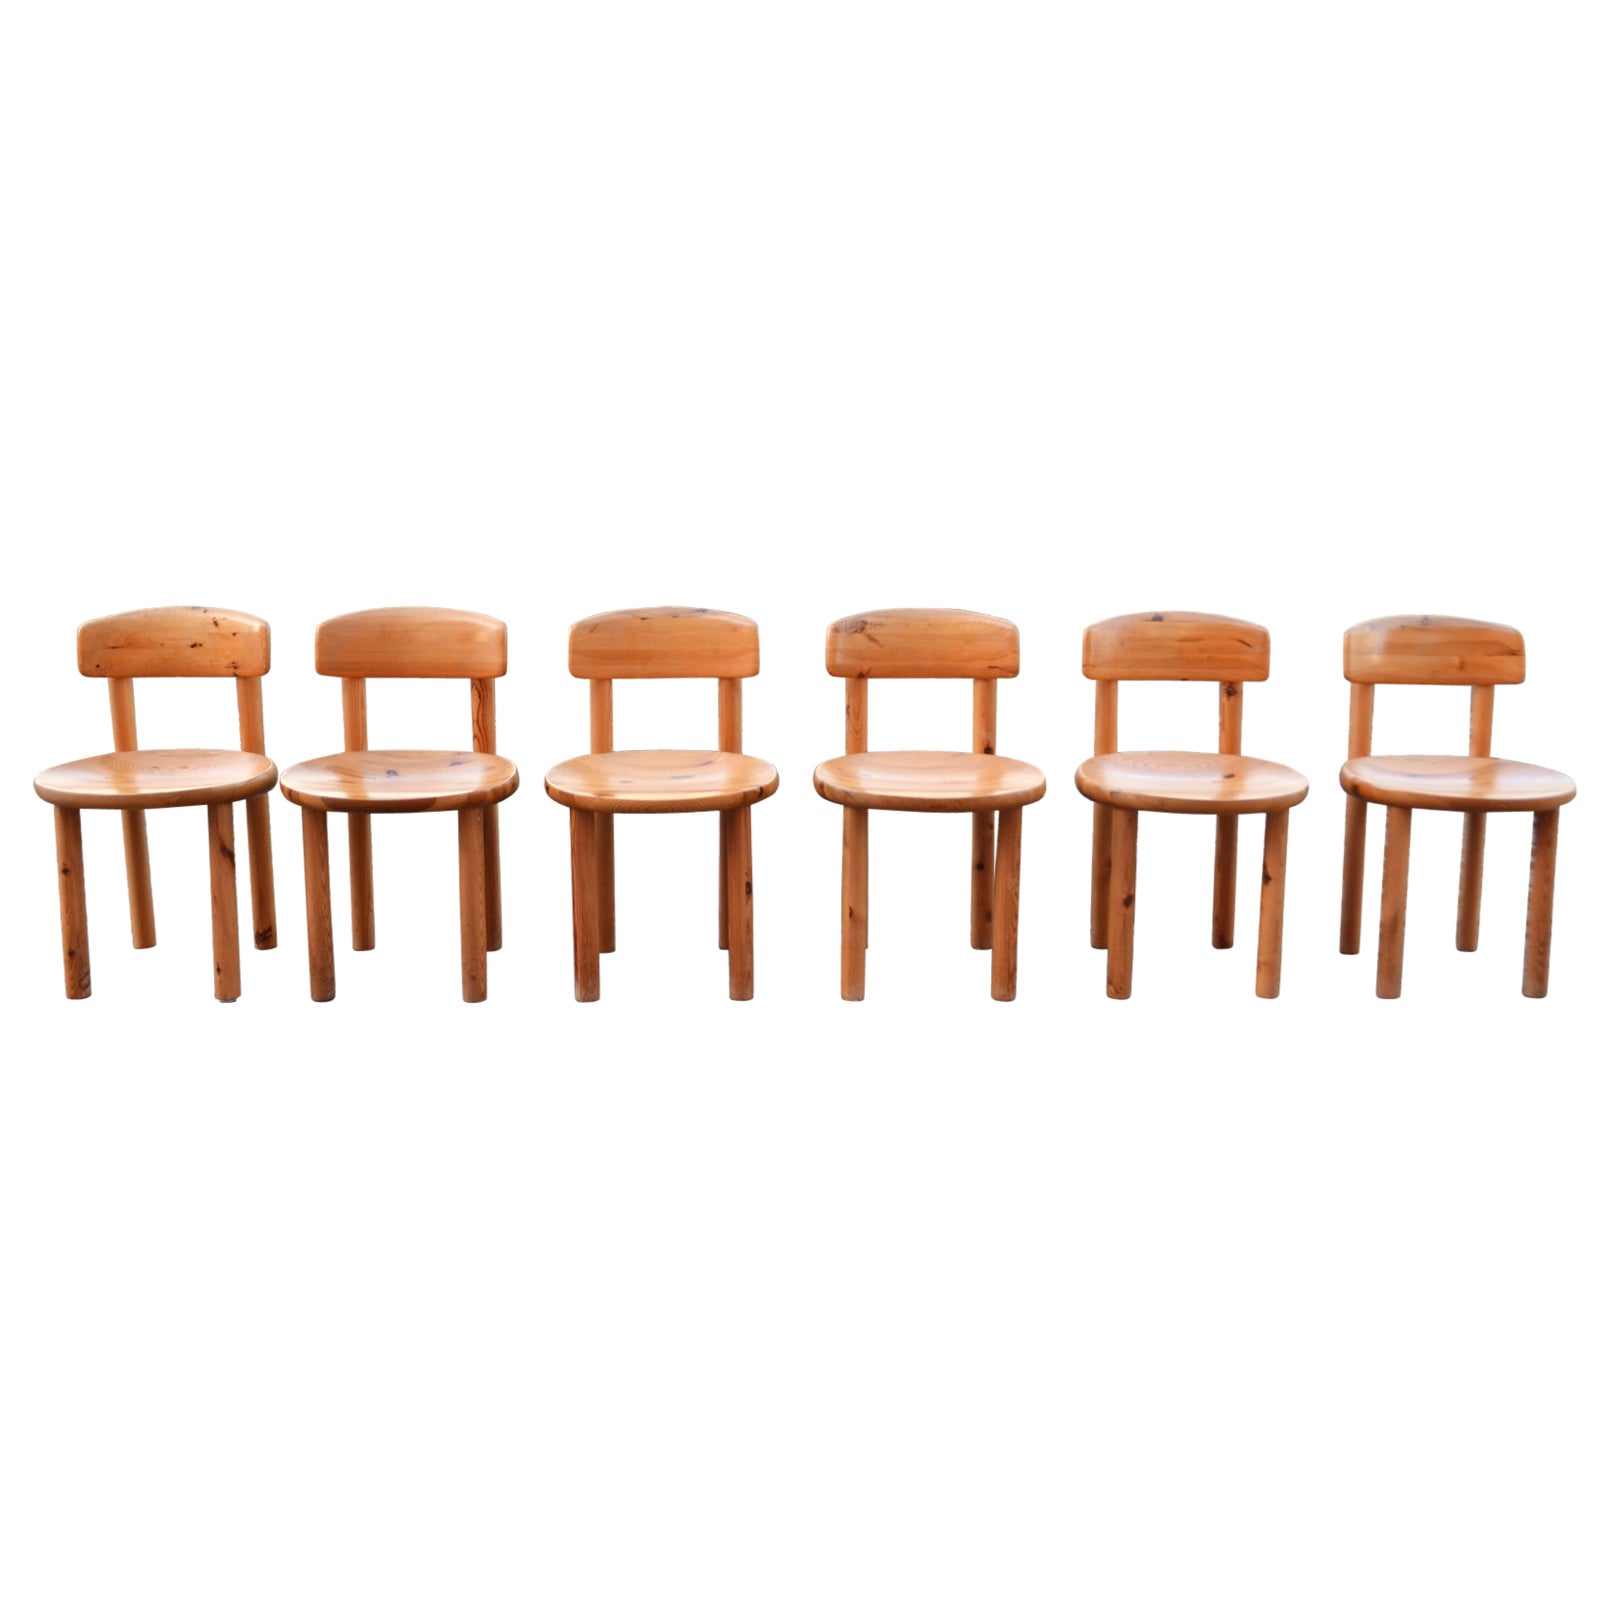 Rainer Daumiller Rare Danish Flex chairs Scandinavian Pine Hirtshals Set of 6 For Sale